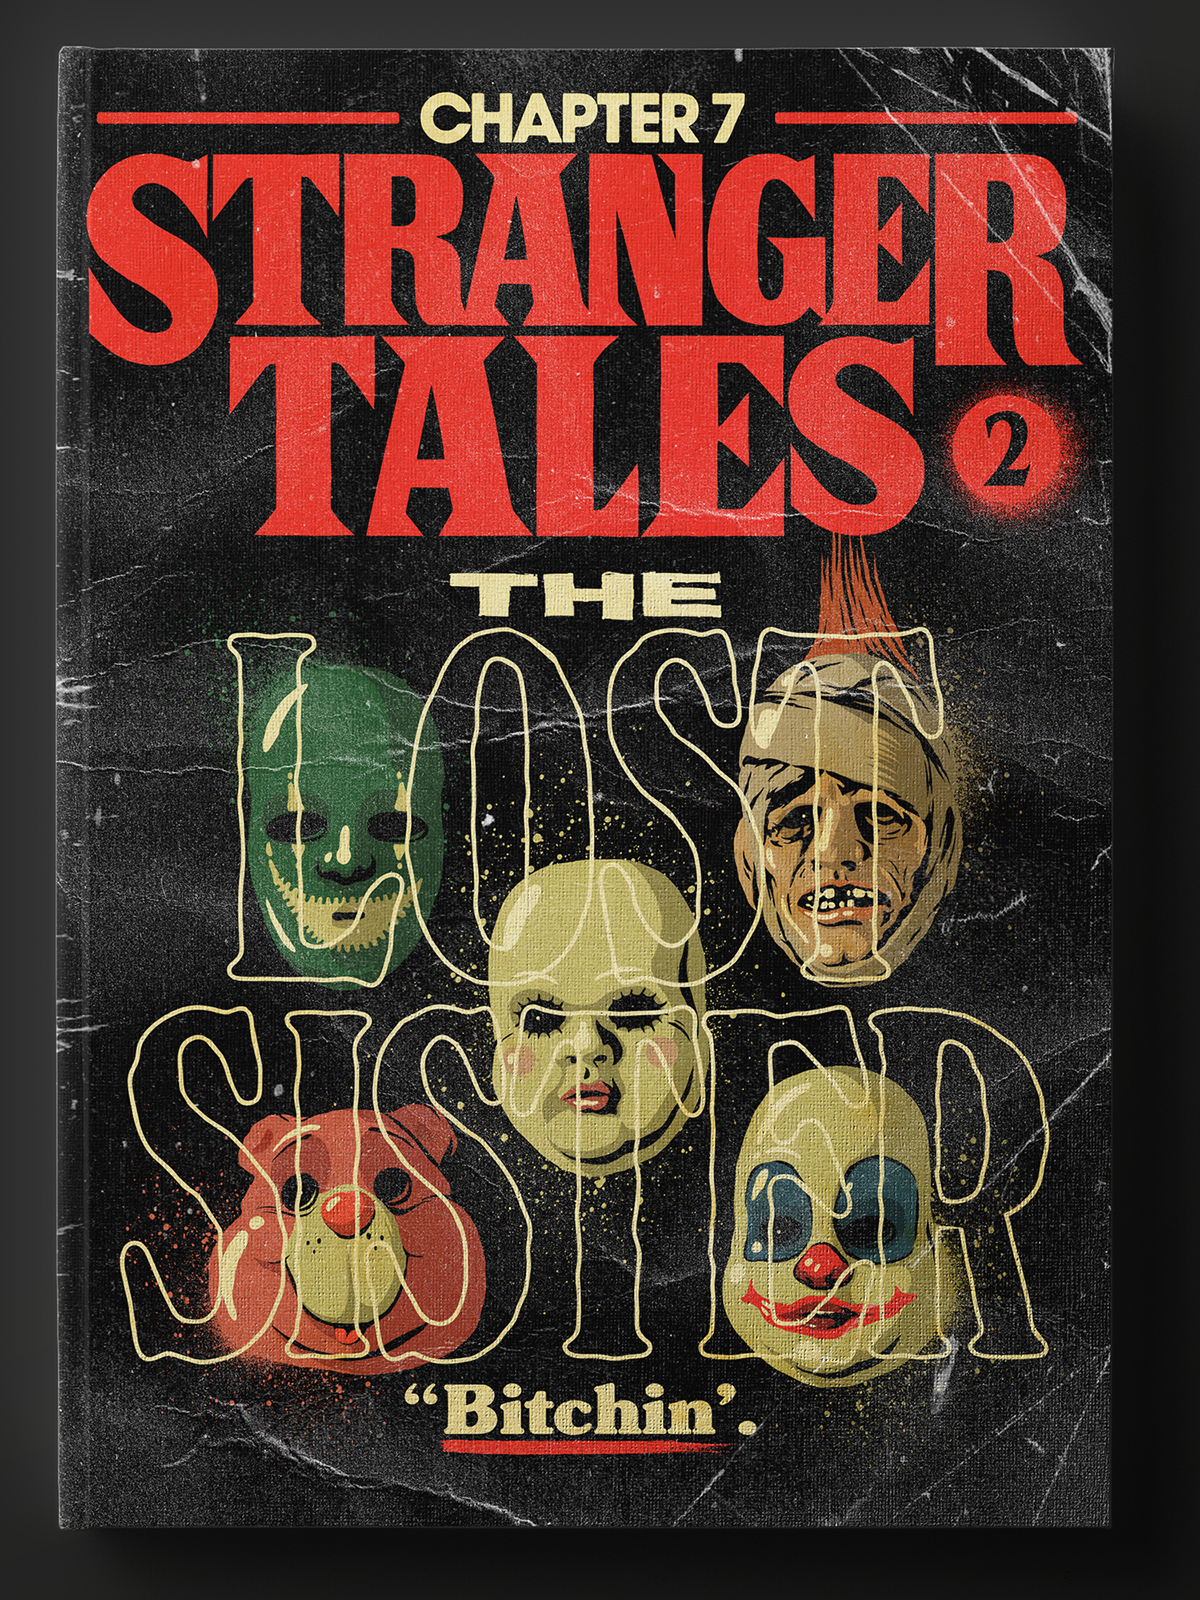 Stranger Things Netflix dario argento comic books Games Videogames atari vintage eerie